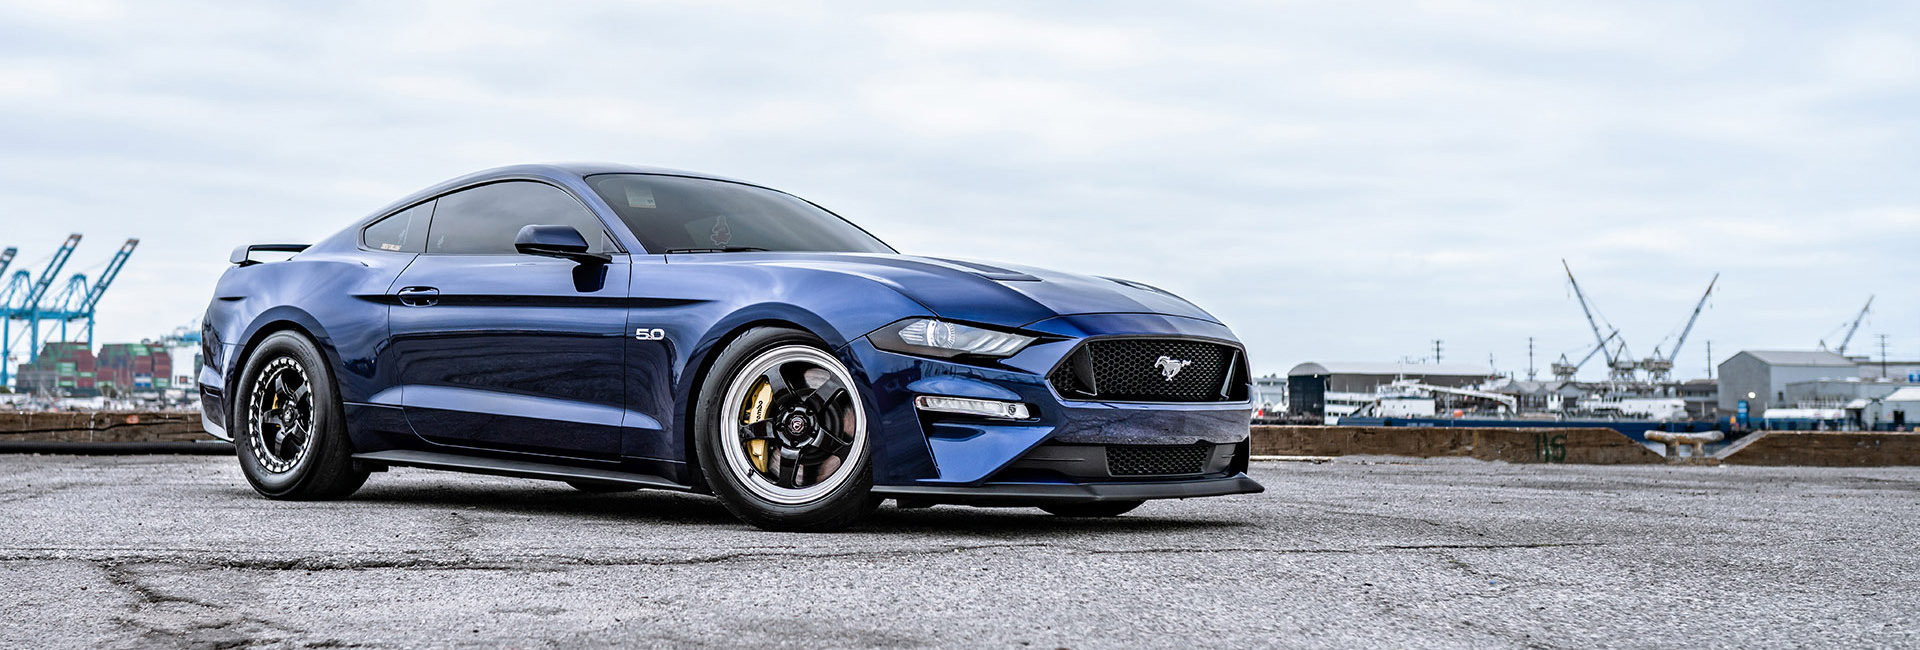 Dark-Blue-Ford-Mustang-GT-Forgestar-D5-Beadlock-Wheels-Featured-Image-1.jpg